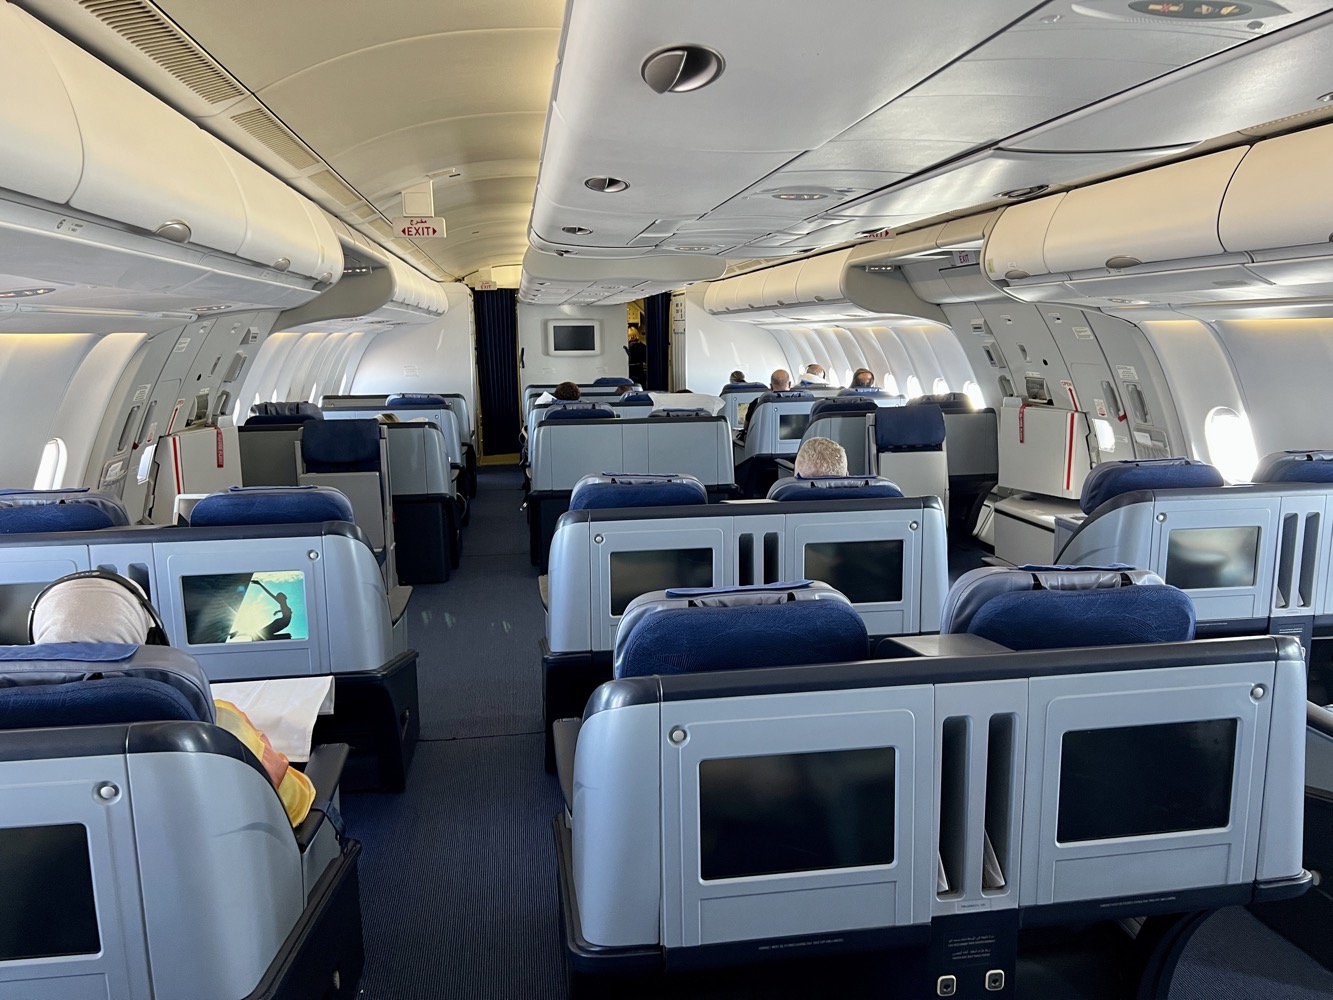 MEA A330-200 Business Class Cabin